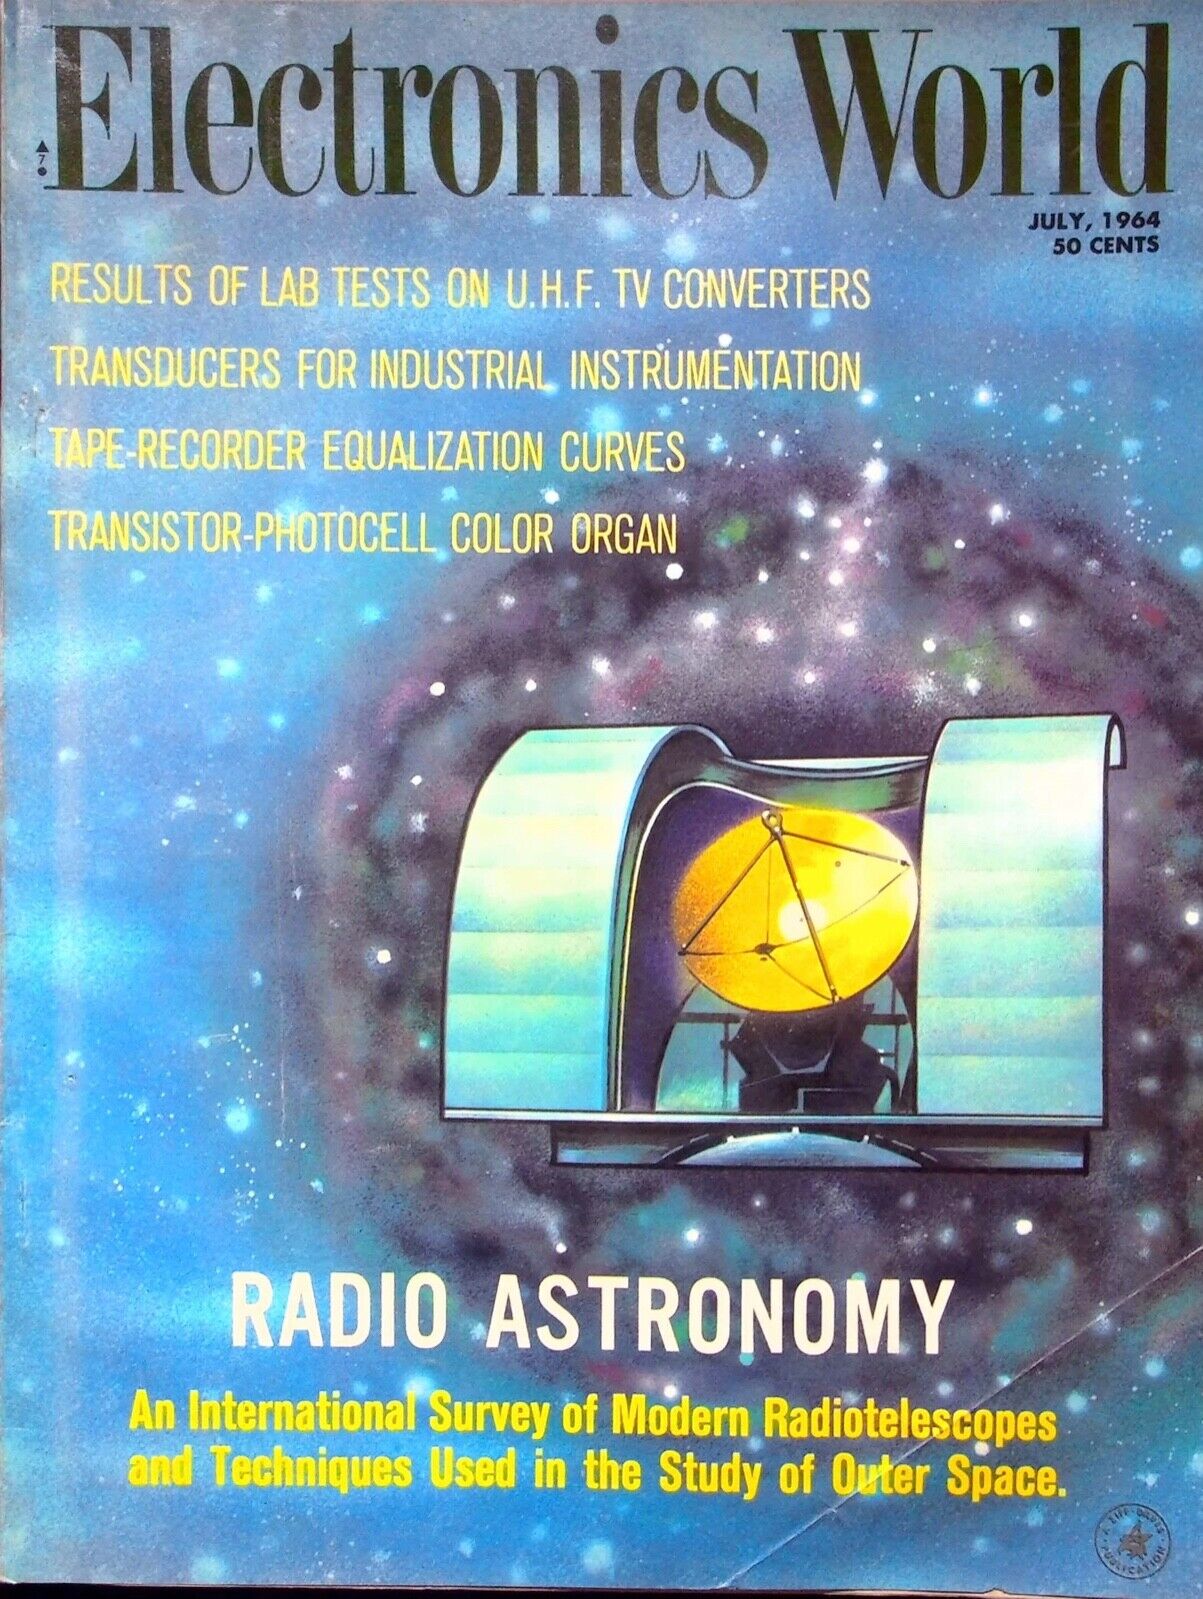 RADIO ASTRONOMY -  ELECTRONICS WORLD MAGAZINE, JULY 1964 VOL. 72, No.1